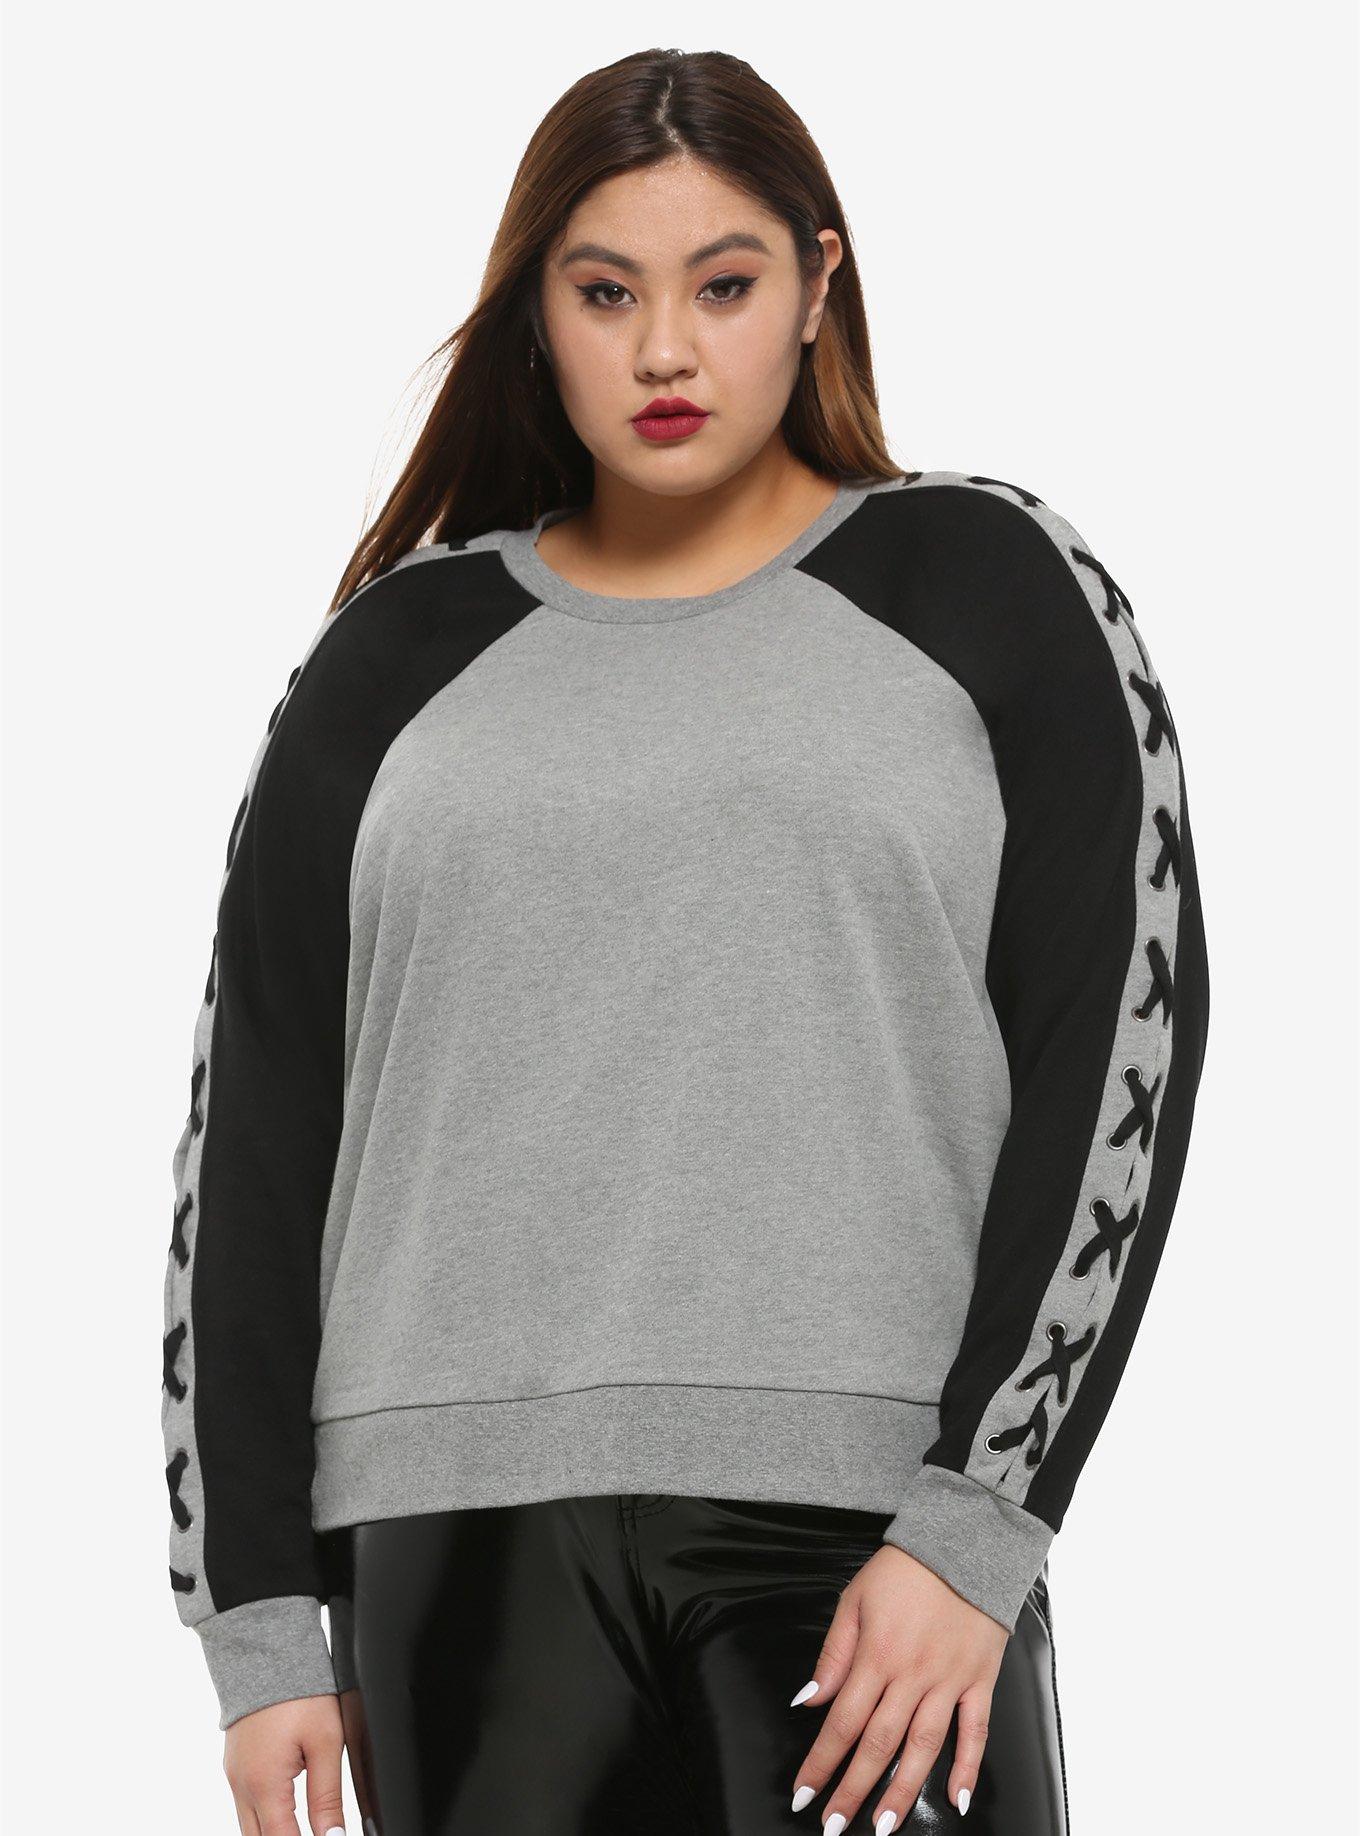 Black & Grey Lace-Up Girls Long-Sleeve Sweatshirt Plus Size, BLACK, hi-res